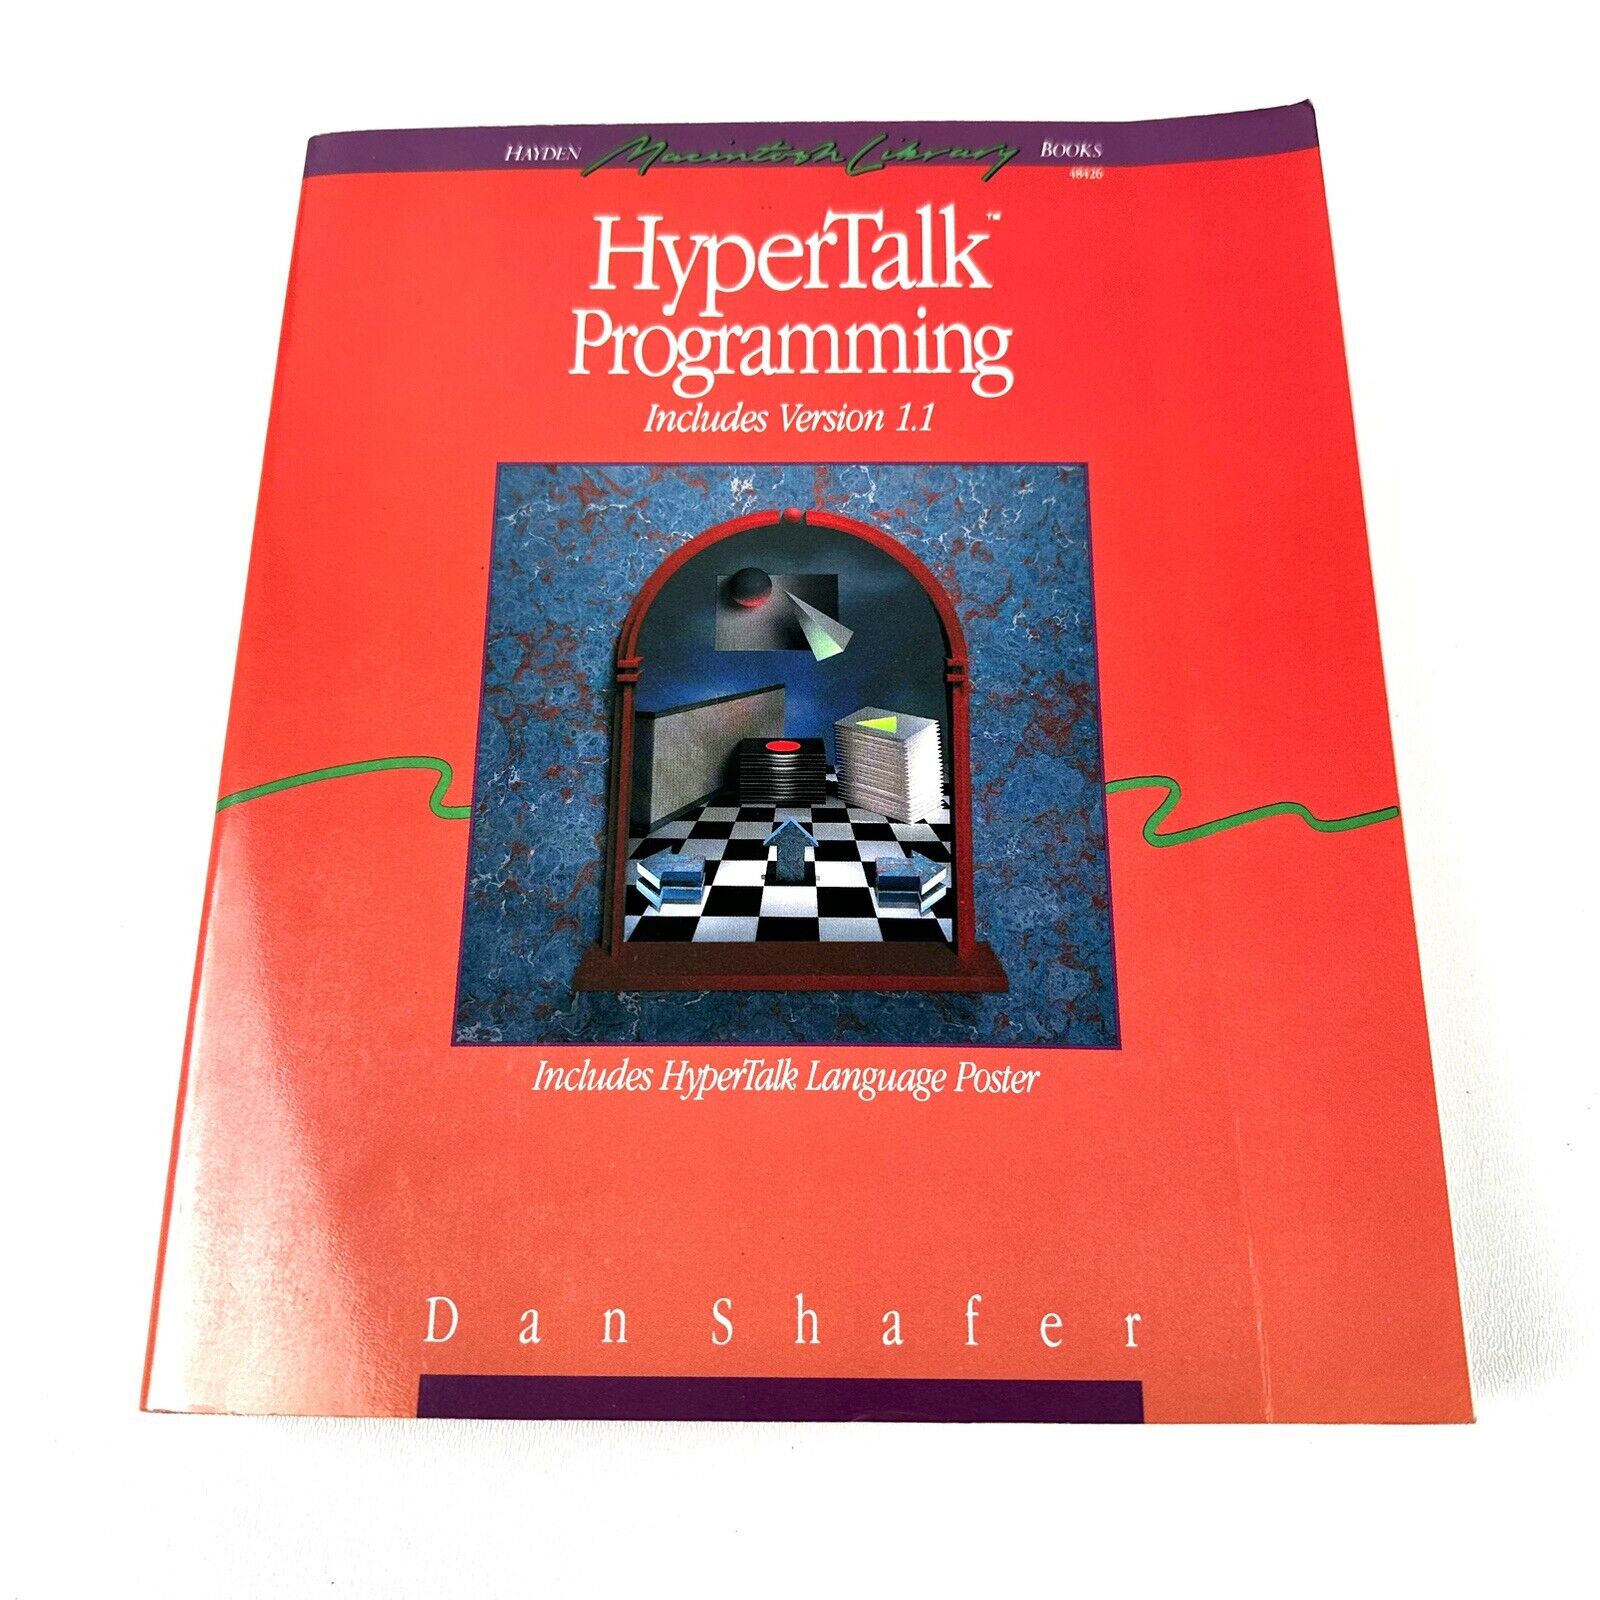 Macintosh Library Books - HyperTalk Programming - Good